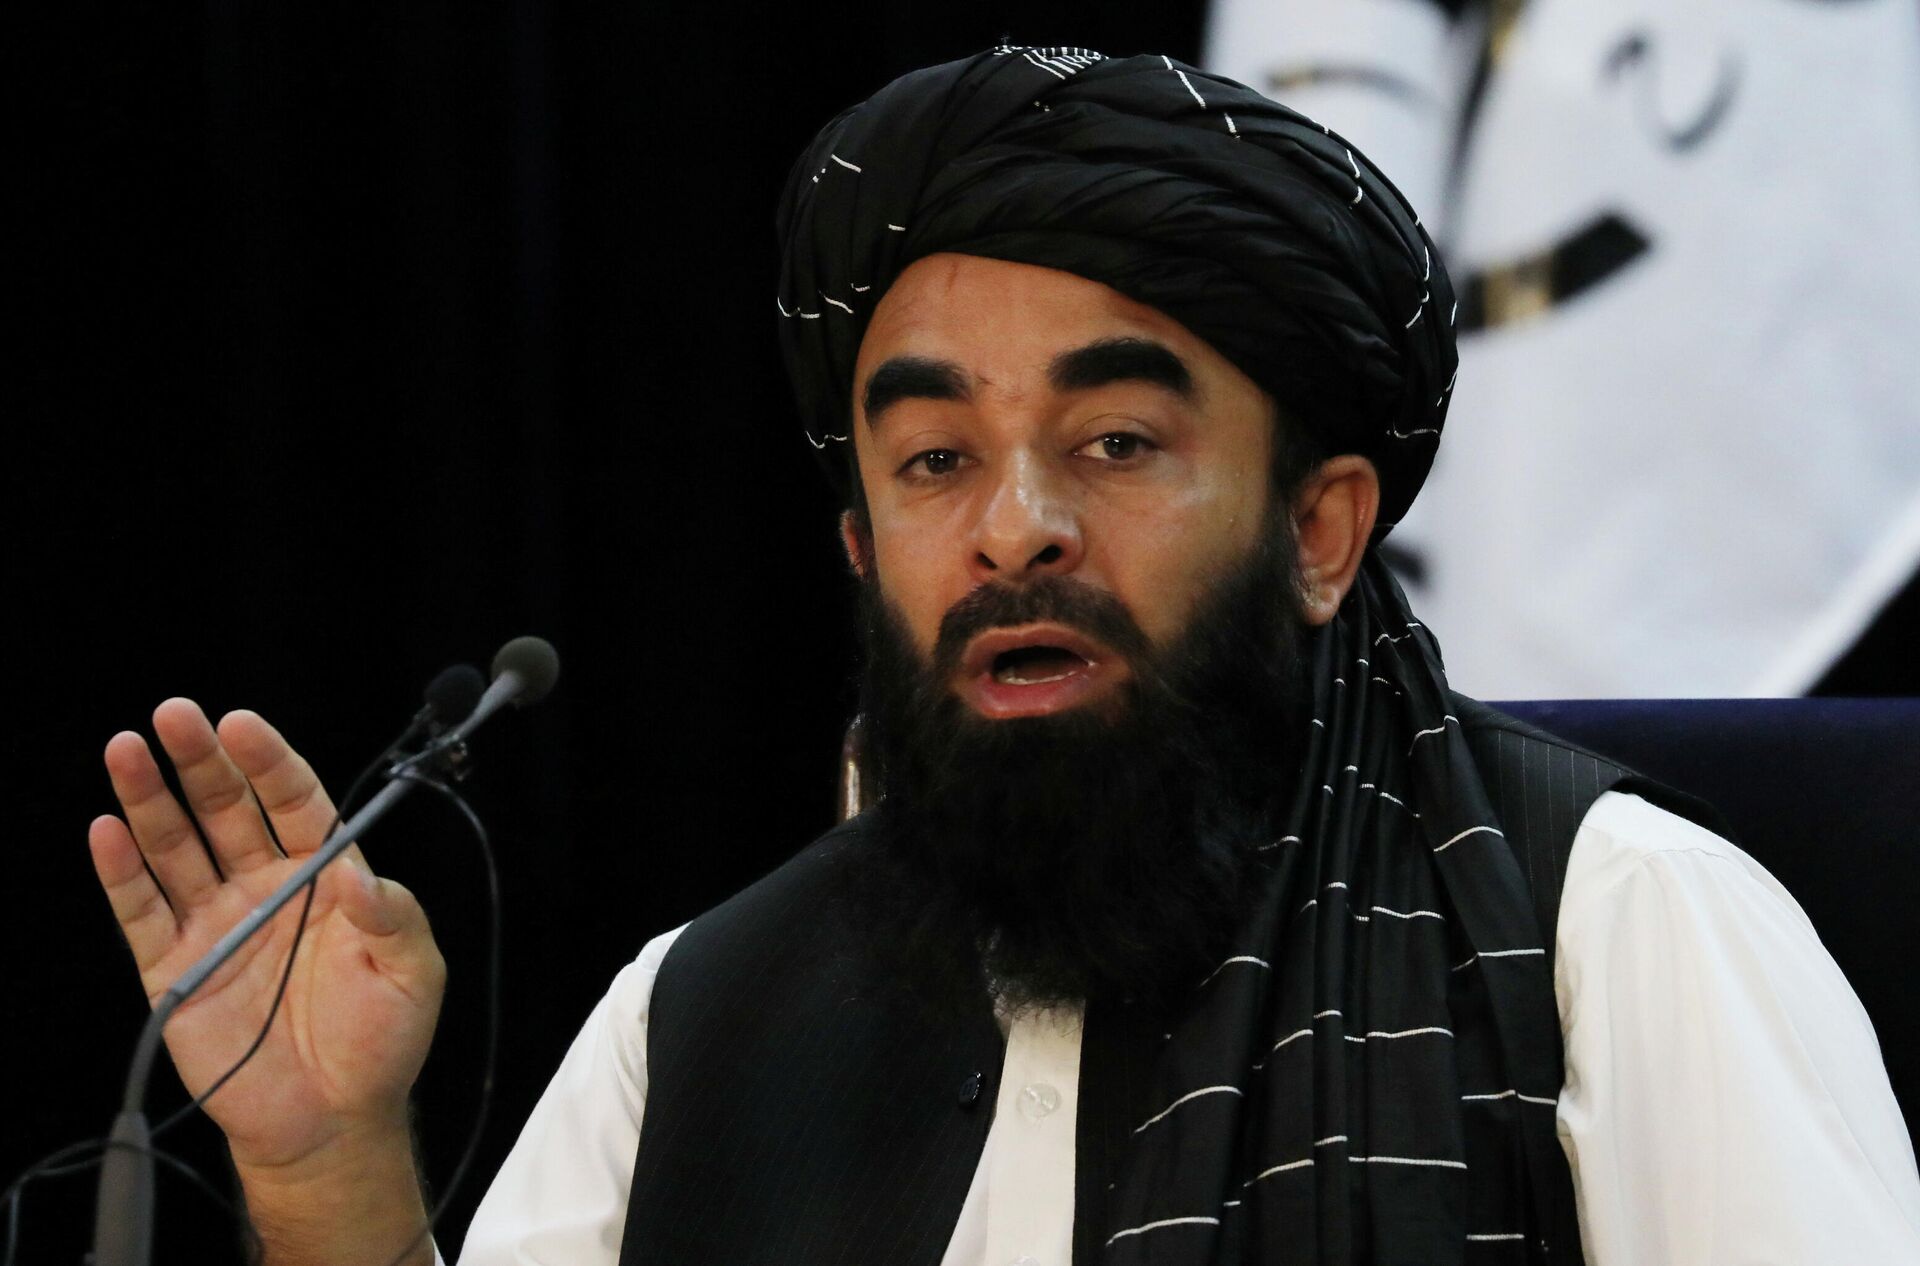 Taliban spokesman Zabihullah Mujahid speaks during a news conference in Kabul, Afghanistan September 6, 2021 - Sputnik International, 1920, 27.09.2021